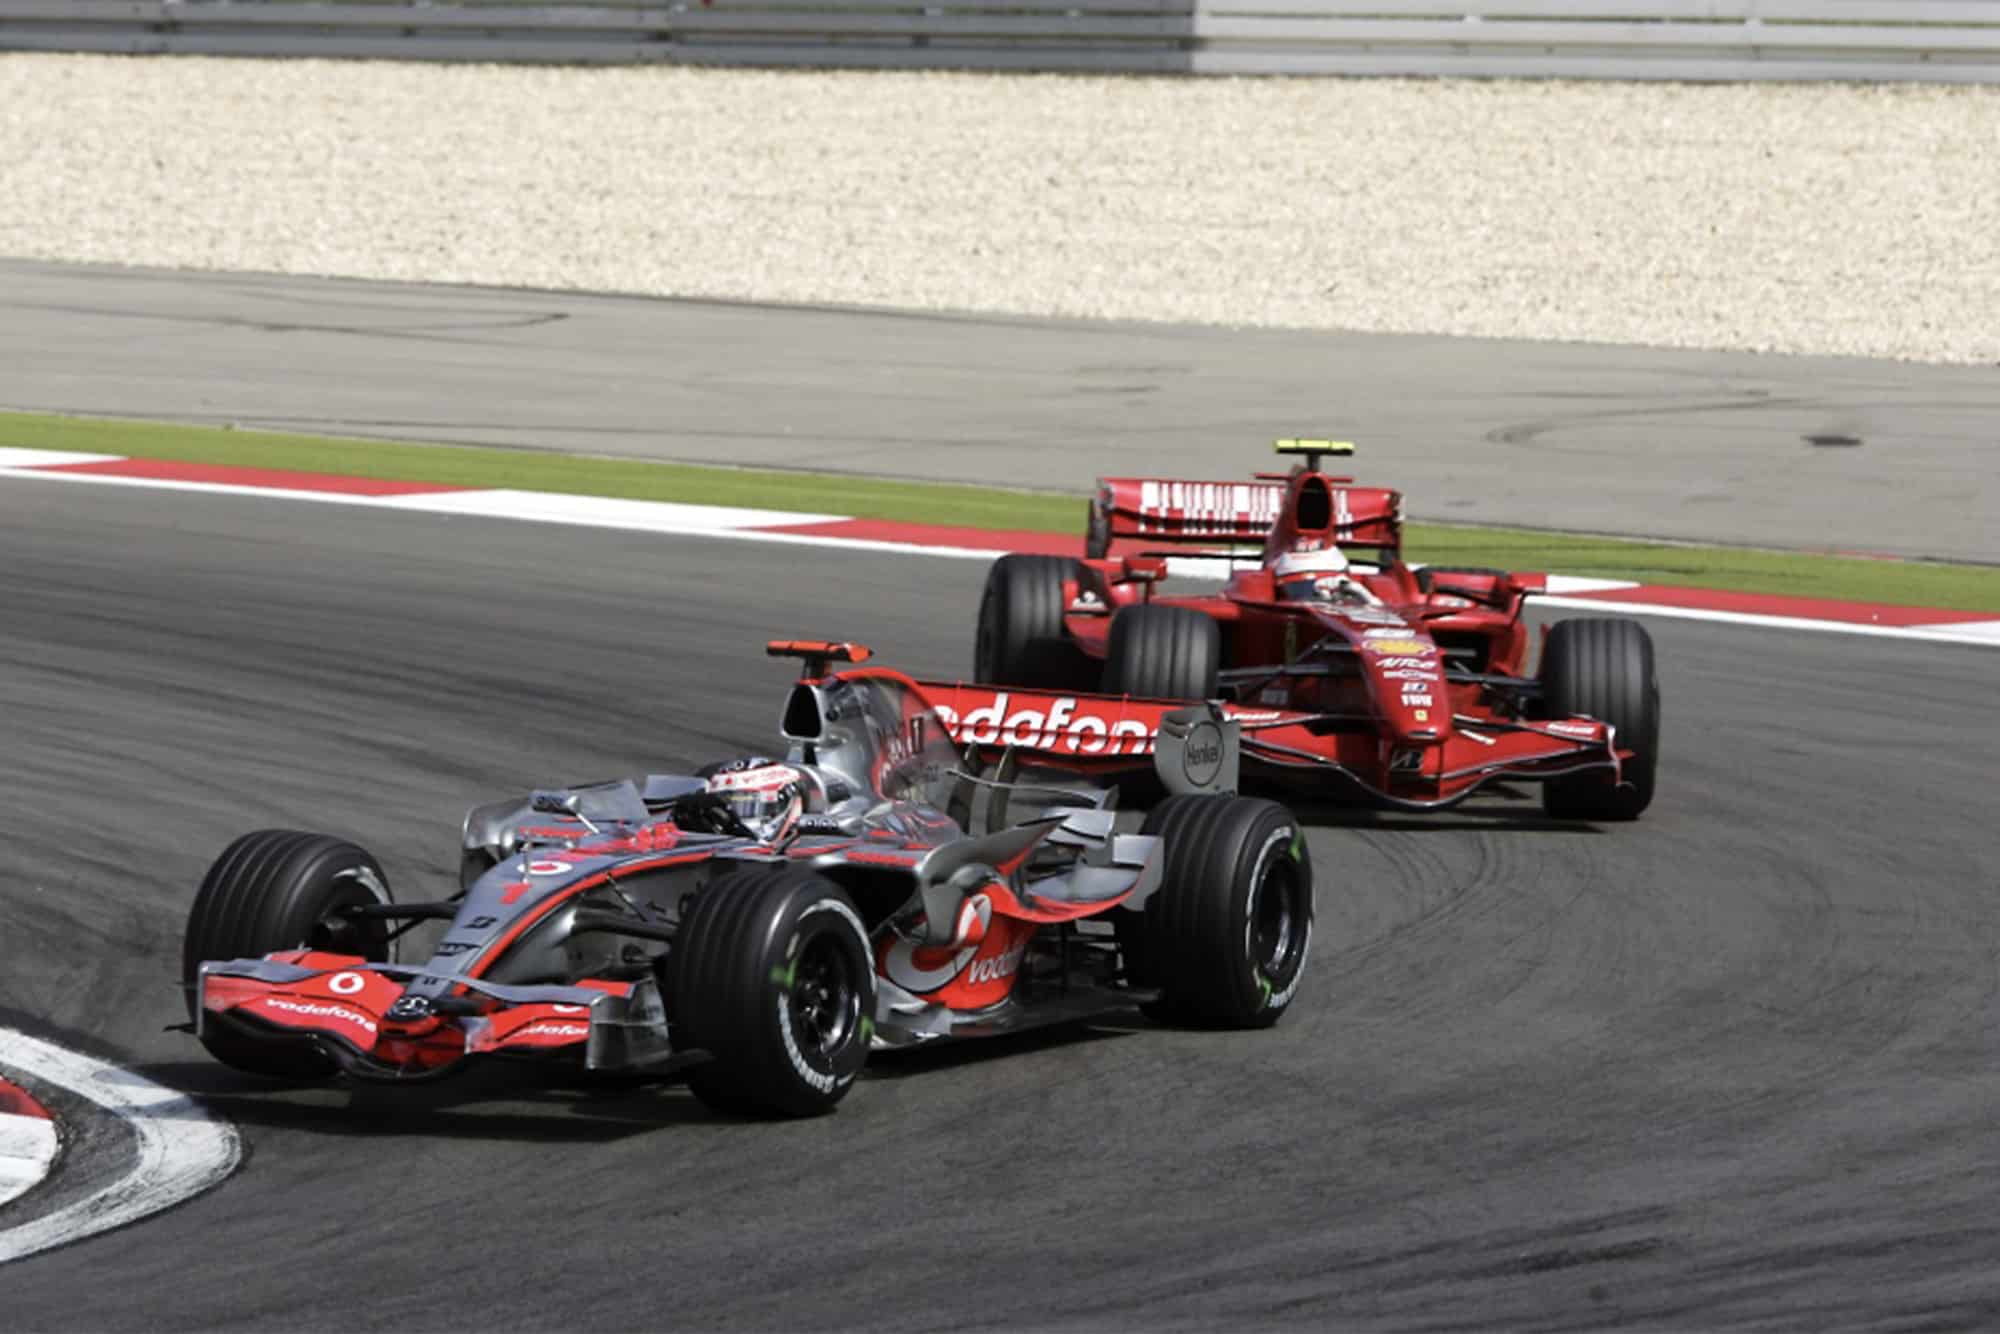 Fernando Alonso in the McLaren and Kimi Raikkonen in the Ferrari during the 2007 German Grand Prix